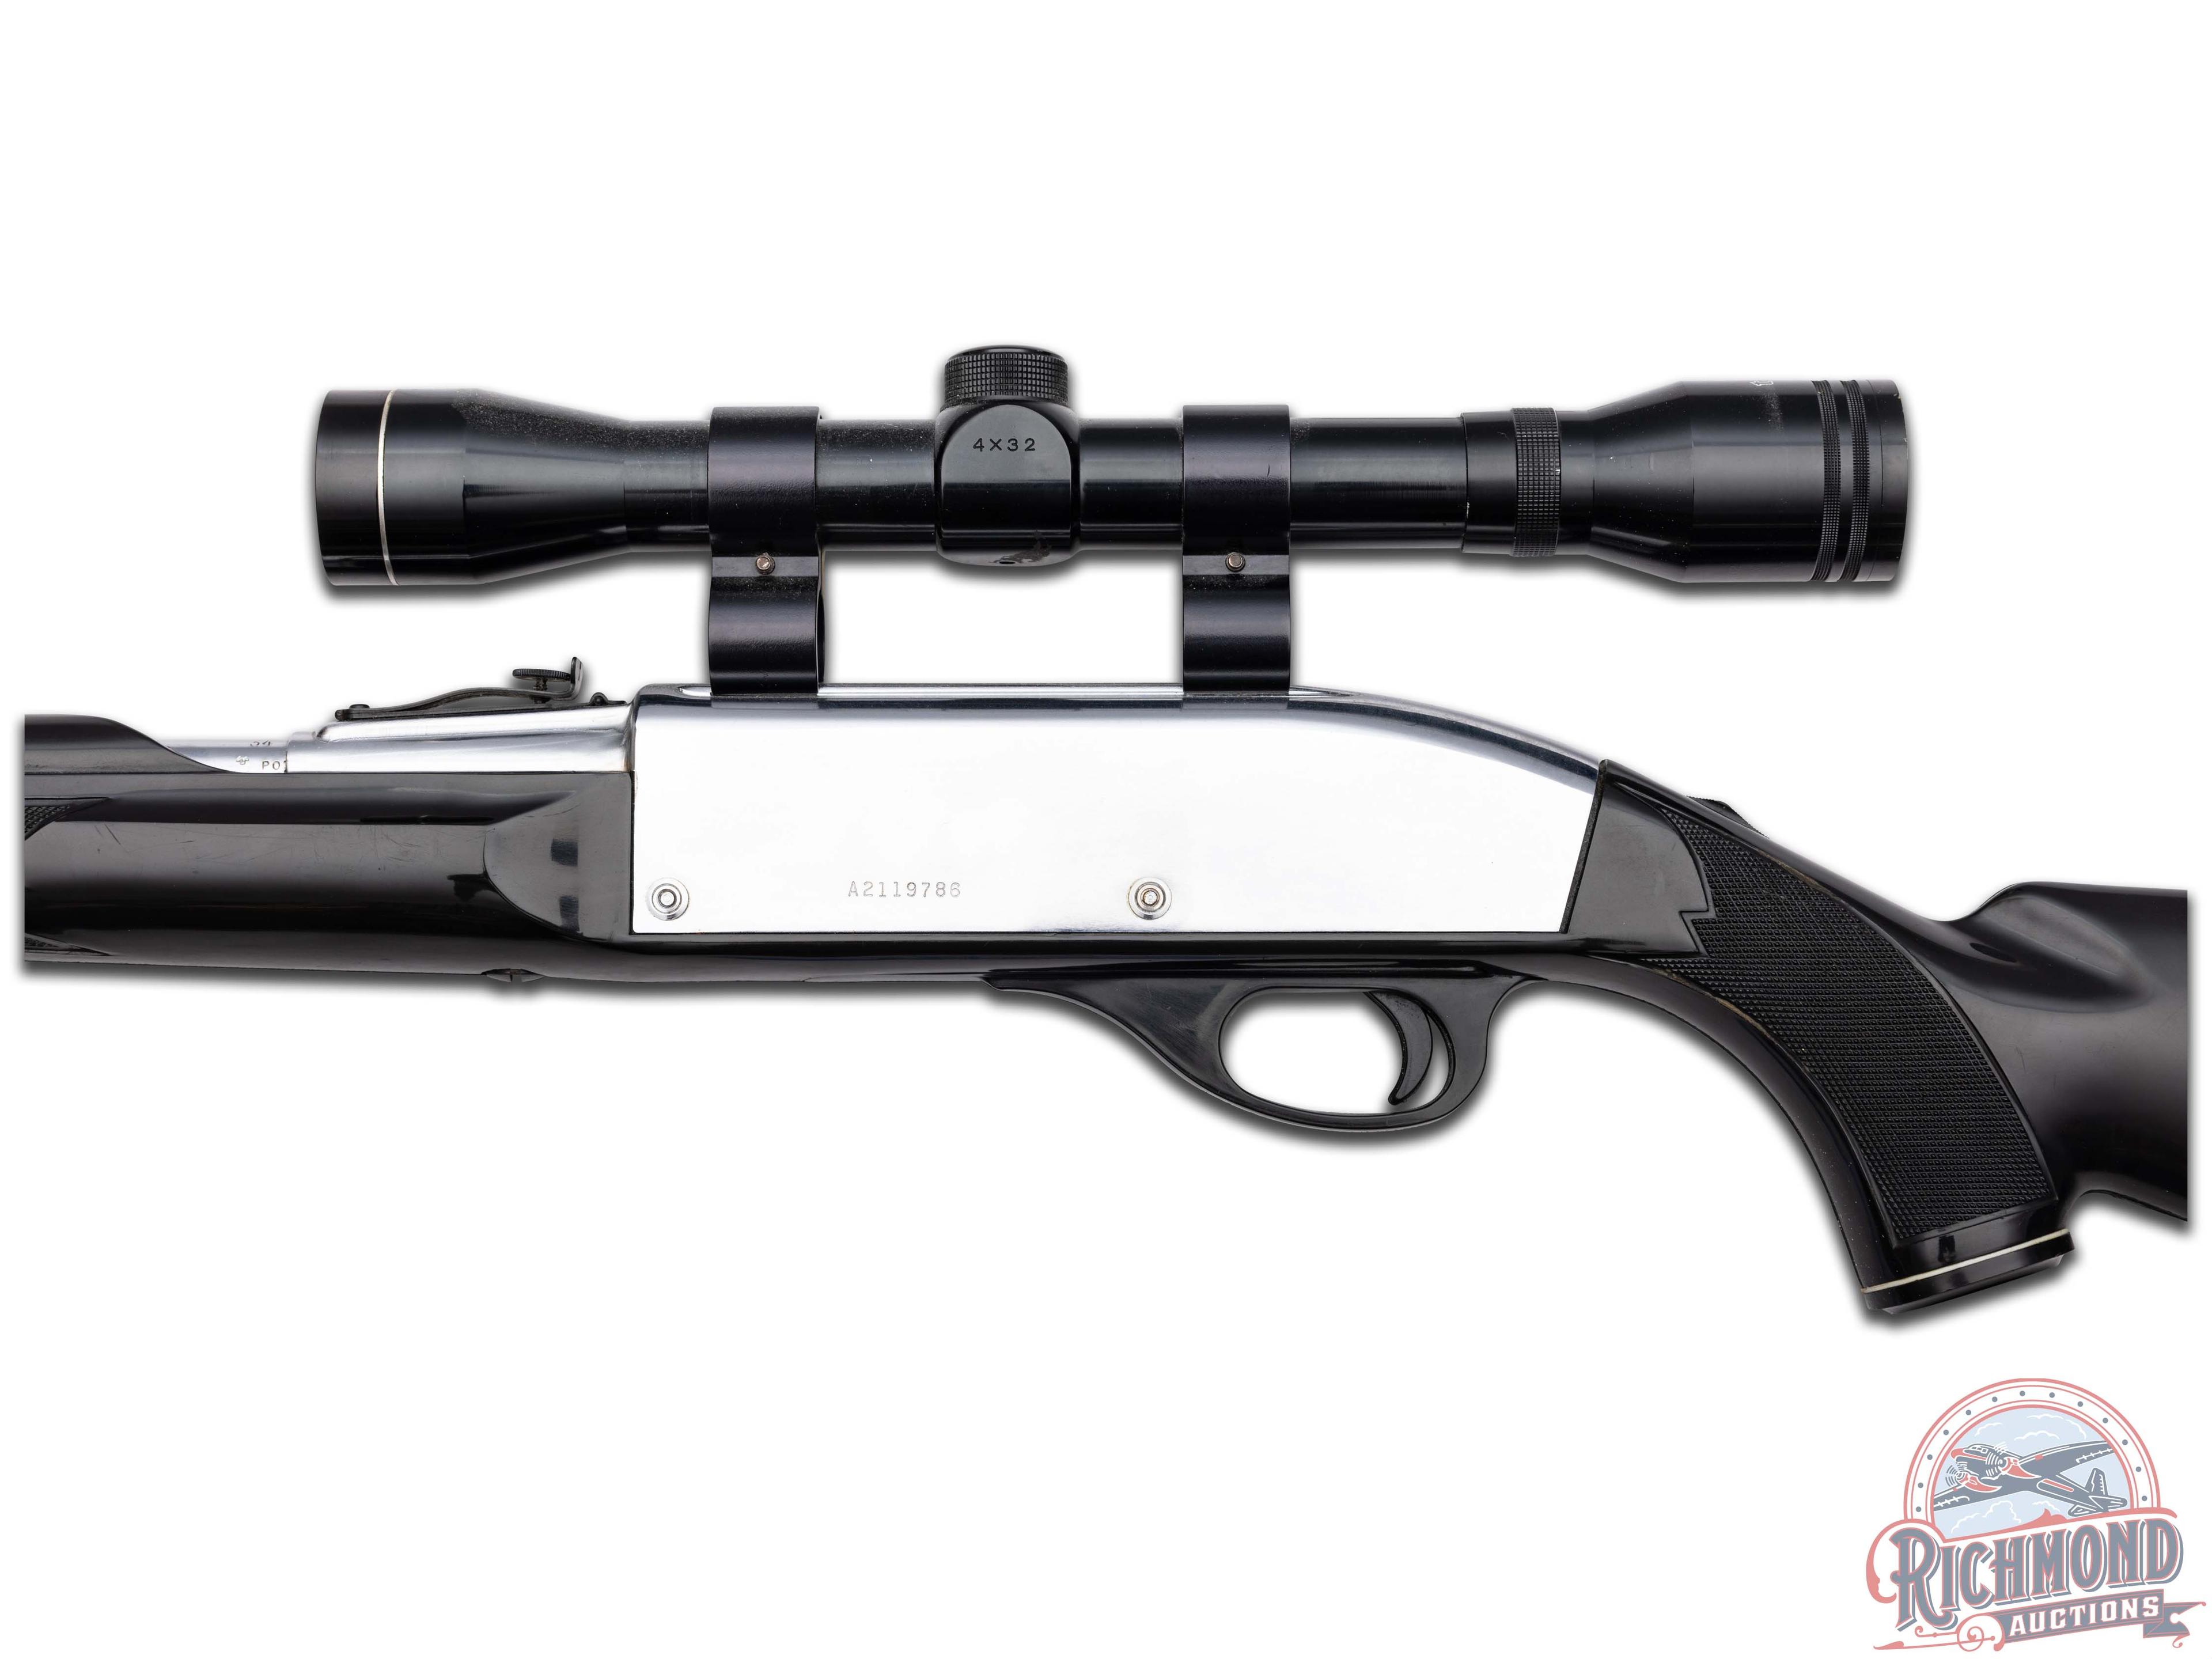 1977 Remington Nylon 66 Apache Black & Chrome .22 LR Semi-Auto Rifle with Scope